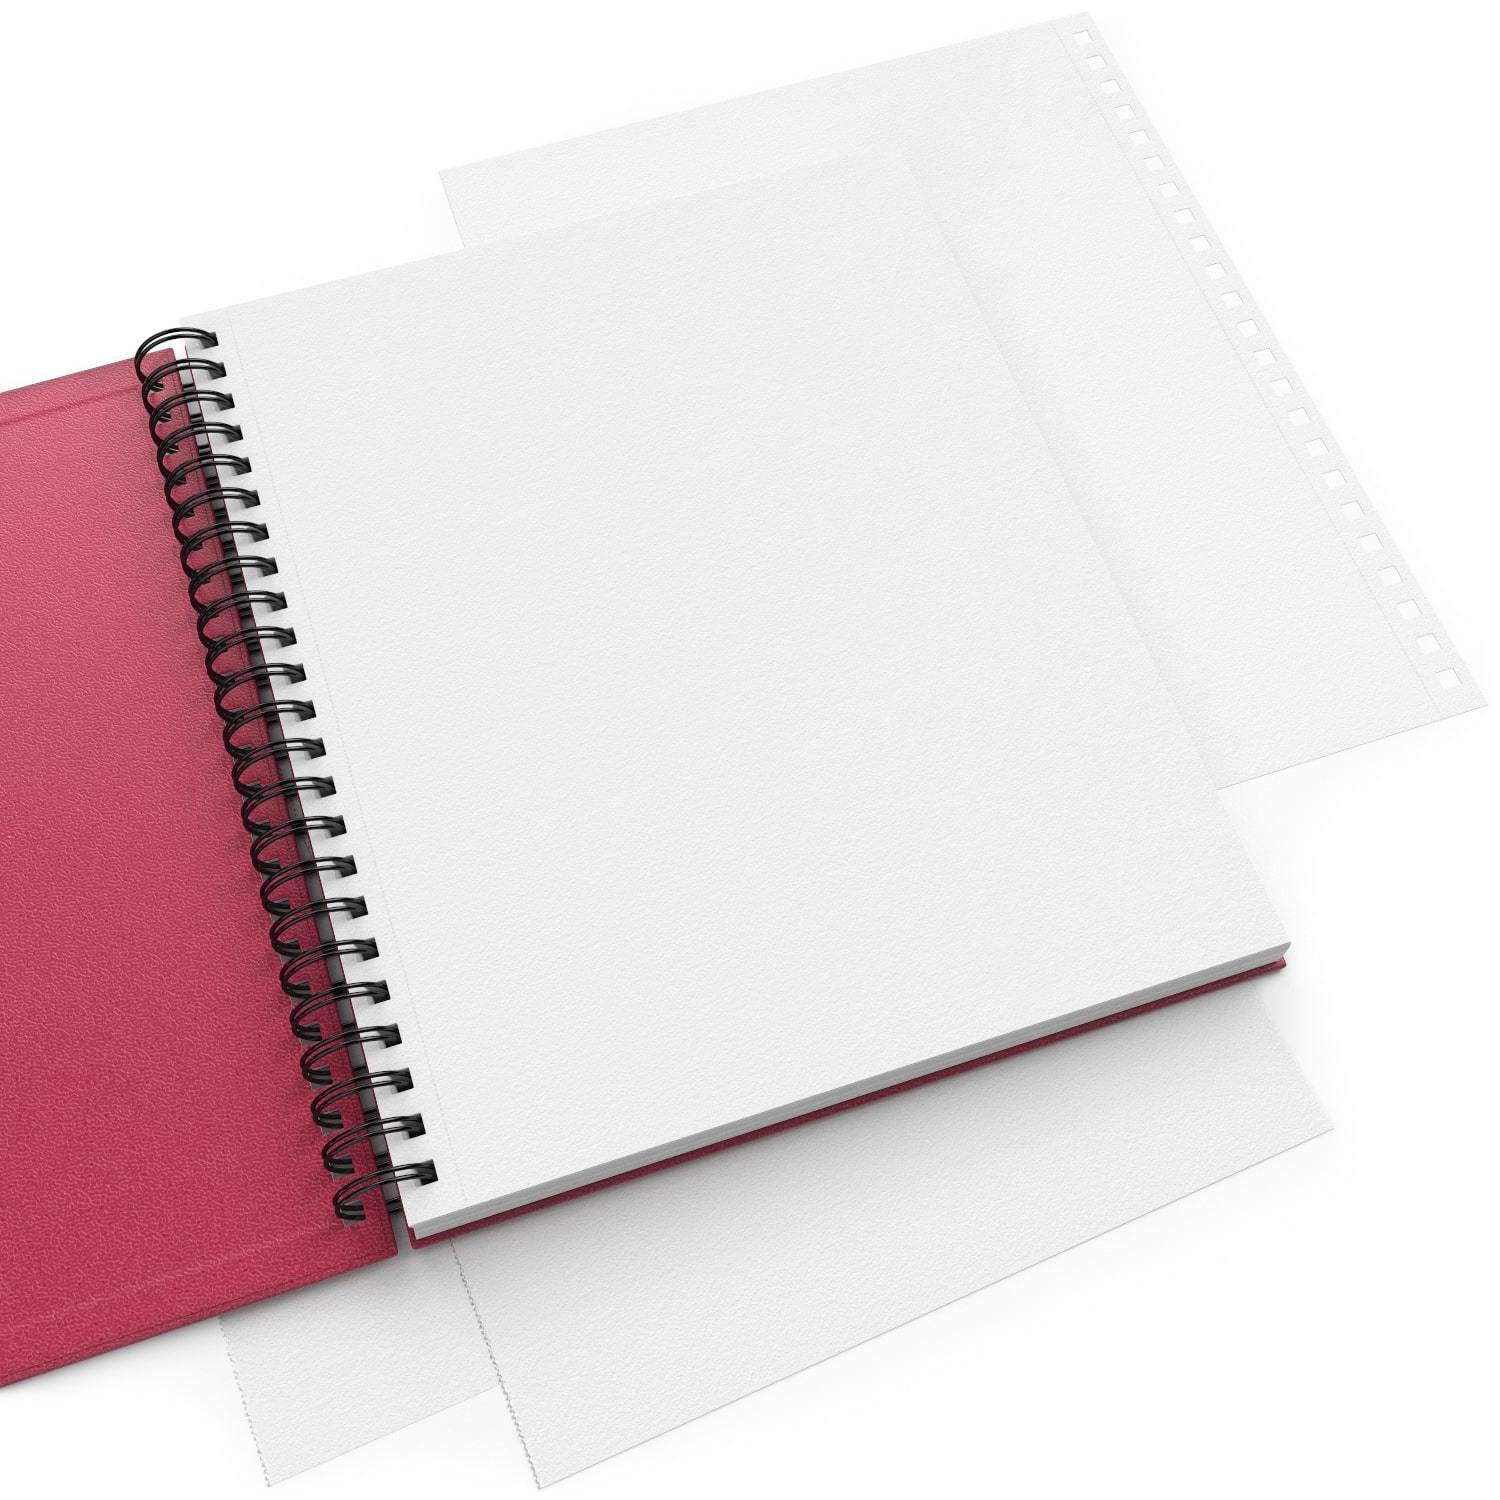 Arteza Sketchbook, Spiral-bound Hardcover, Pink, 9x12, 200 Pages